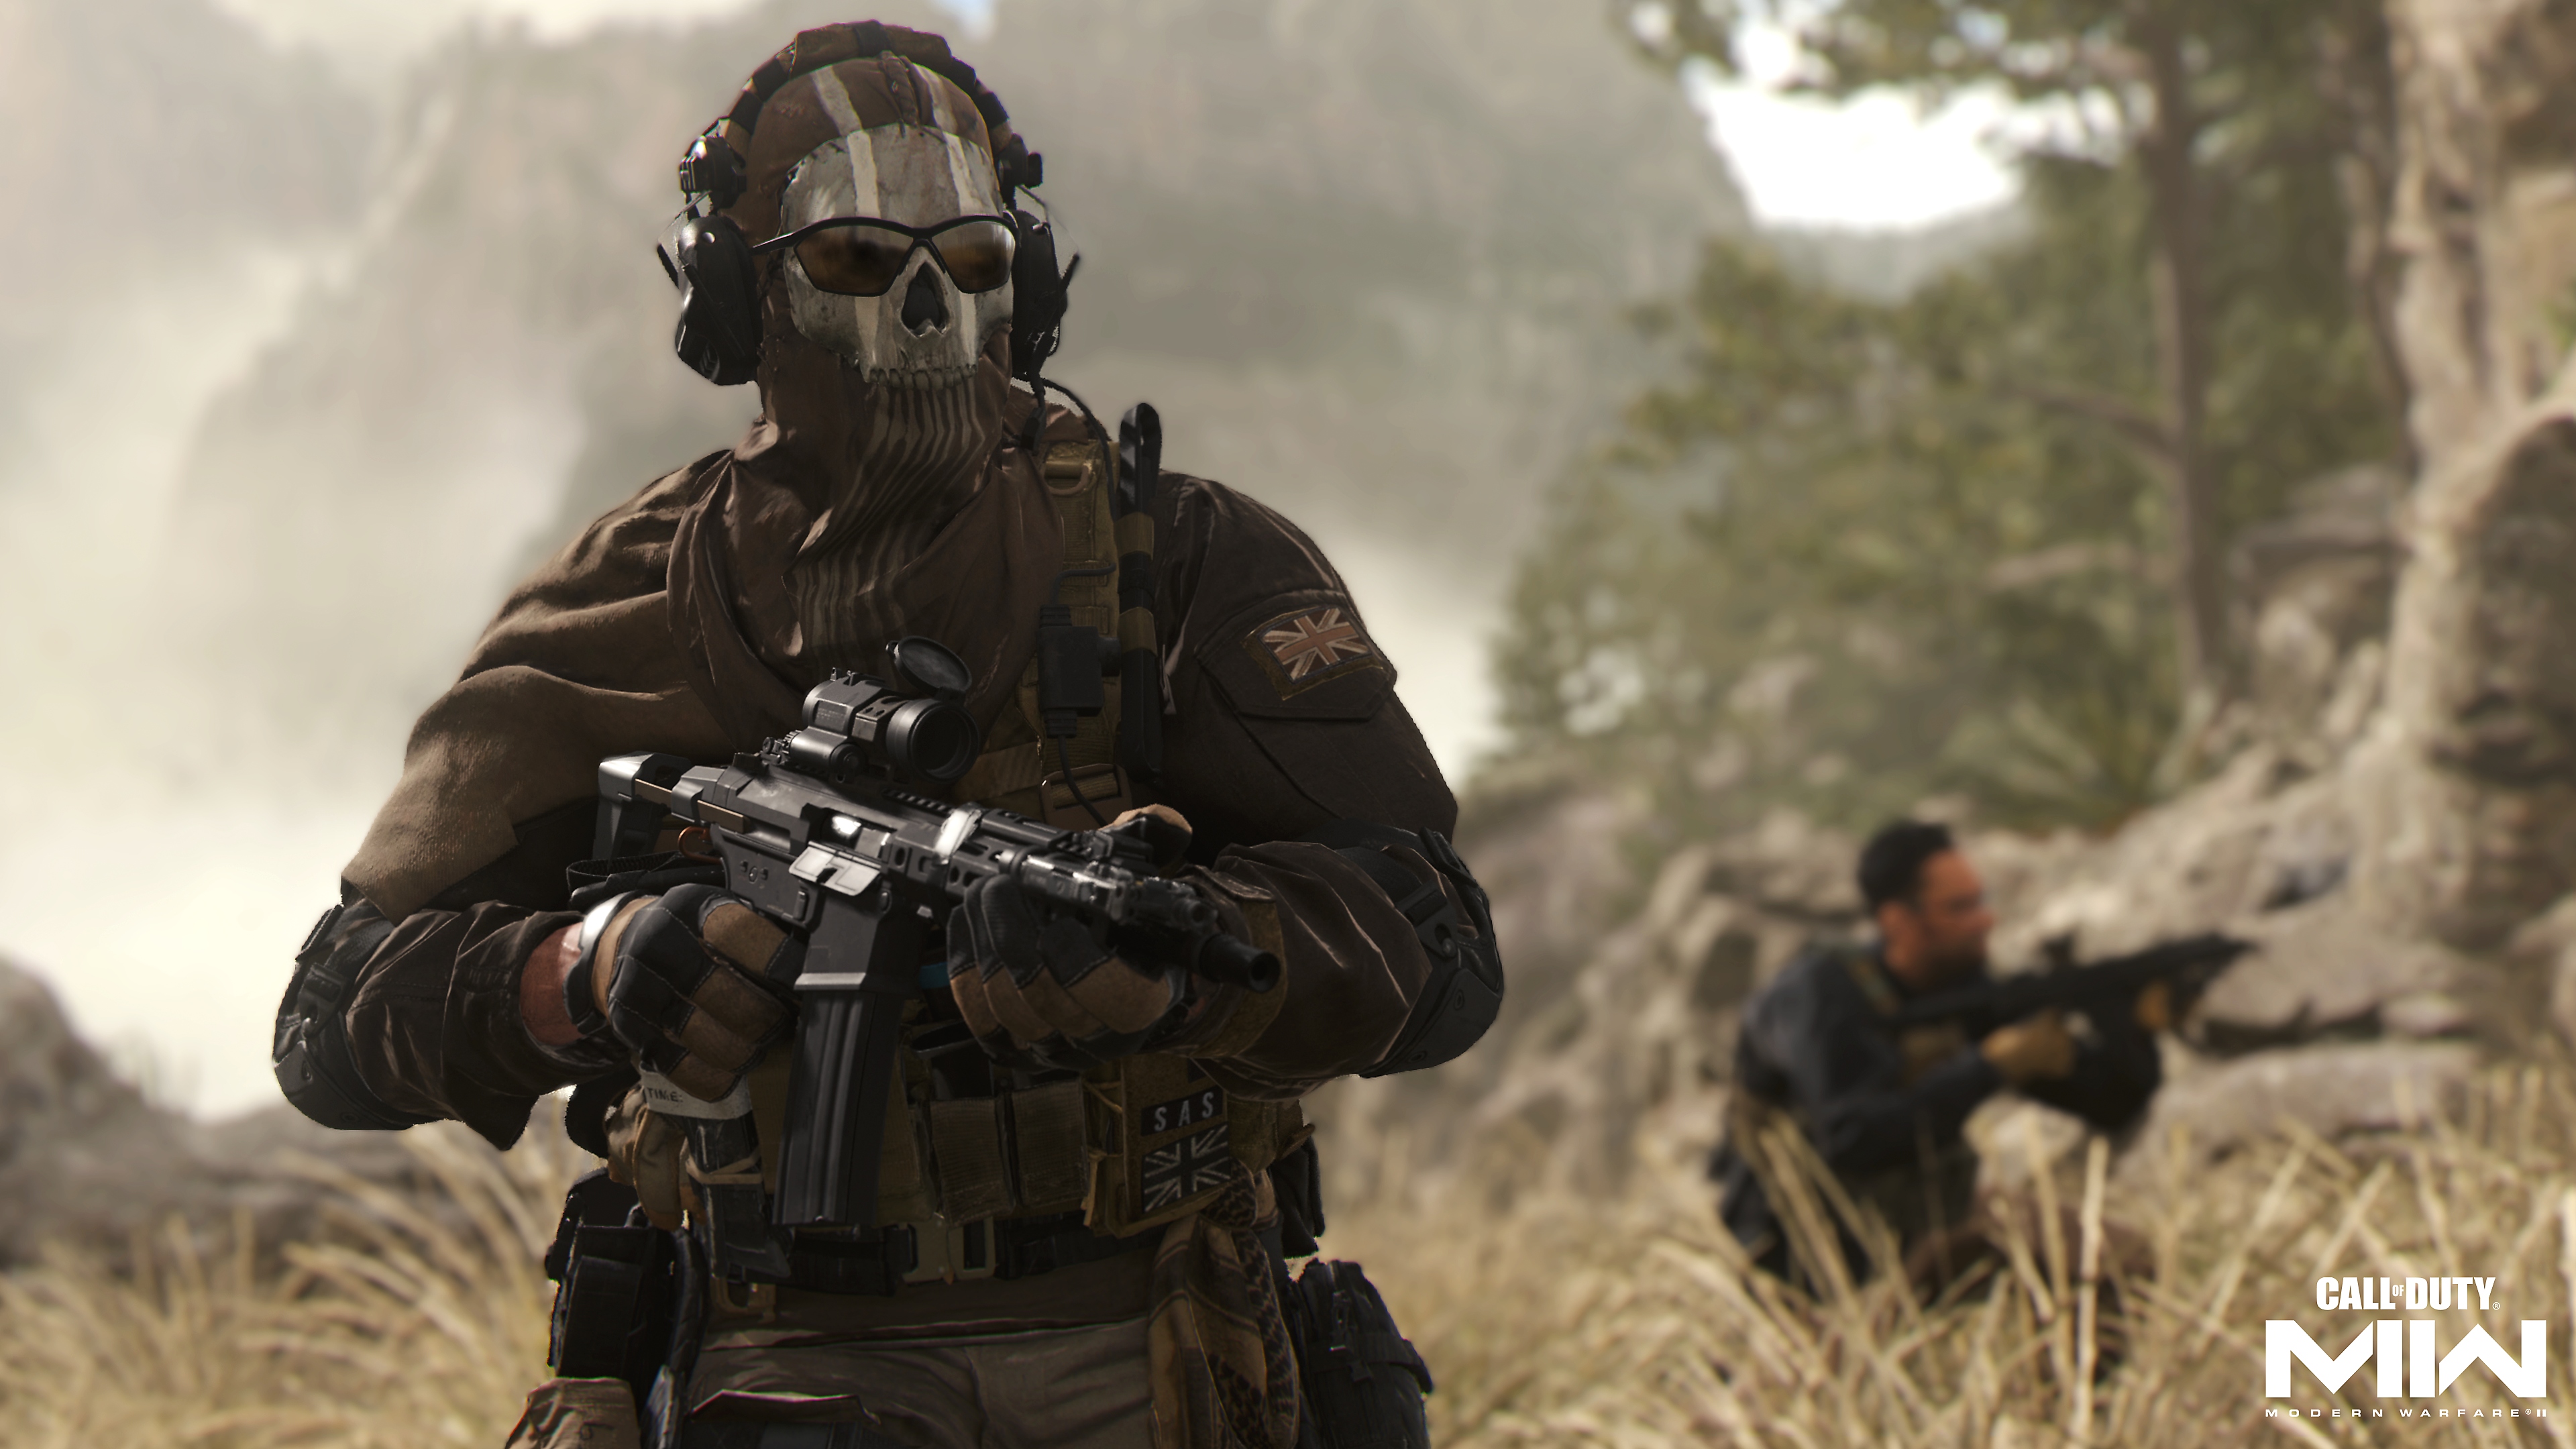 Call of Duty: Modern Warfare 2 2022 captura de pantalla mostrando a Ghost